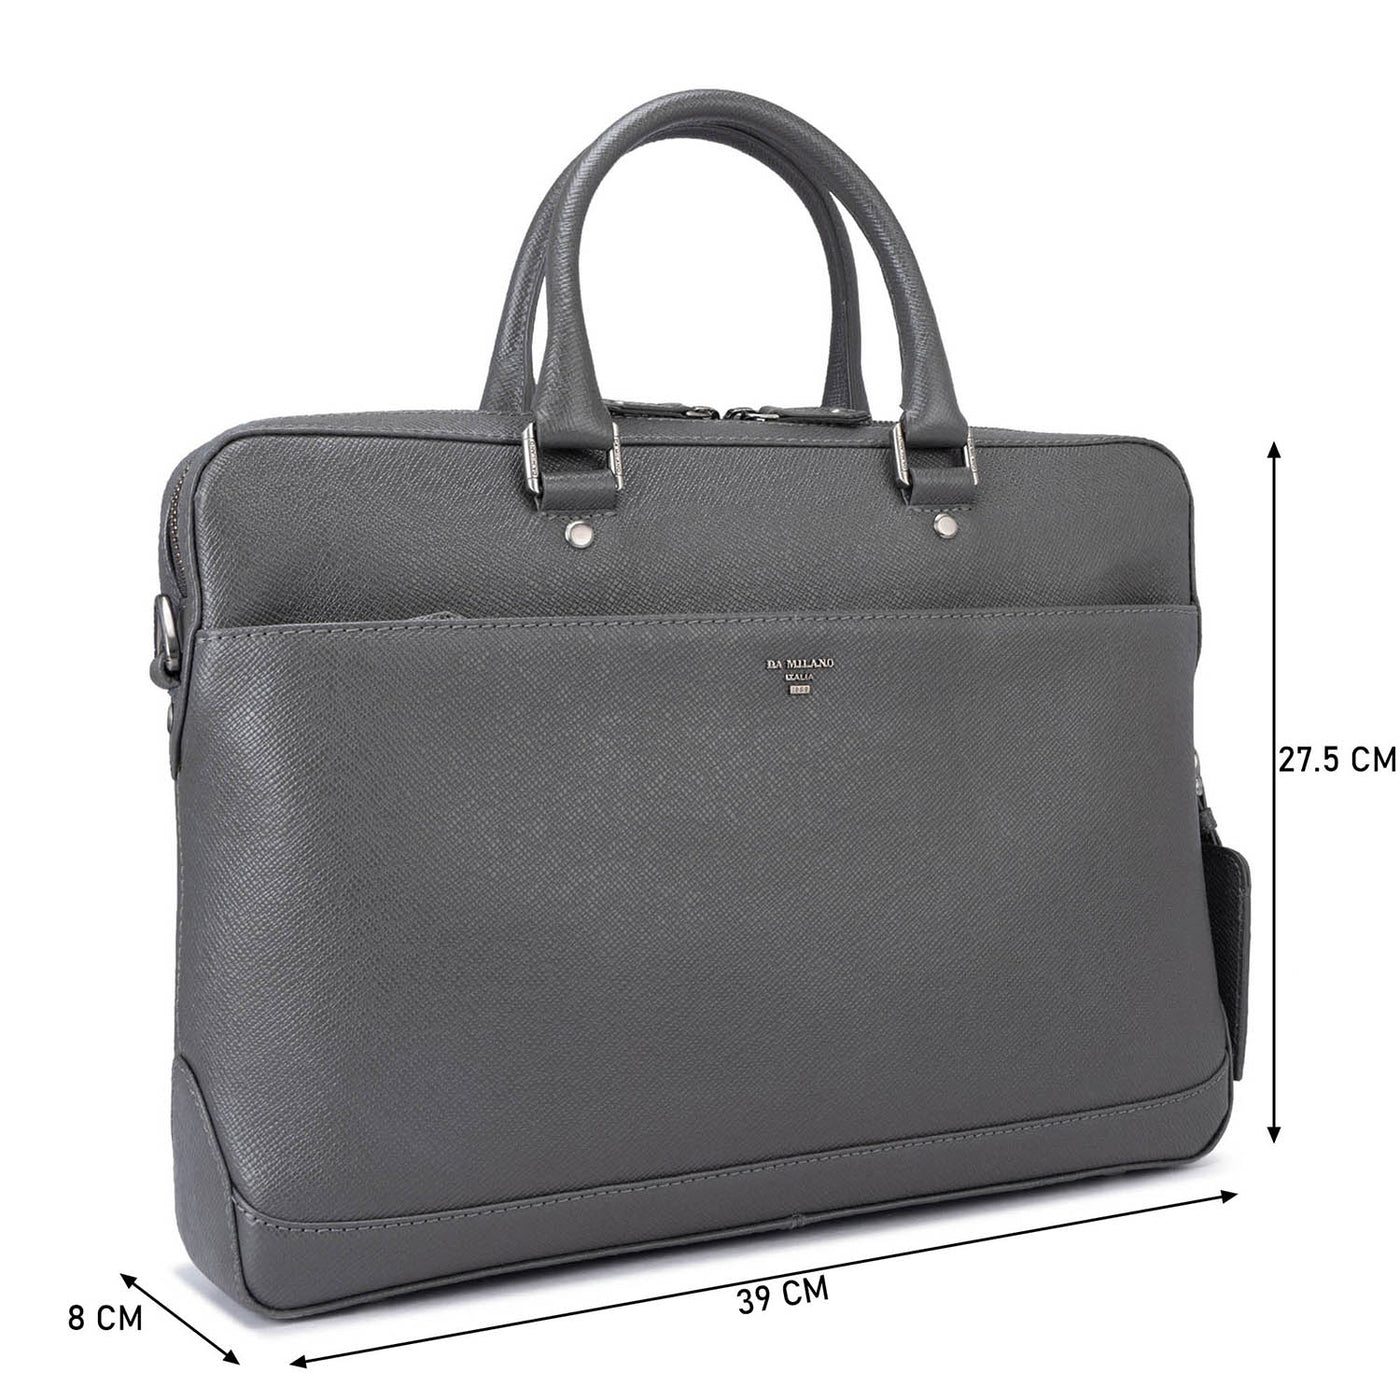 Grey Franzy Leather Laptop Bag - Upto 14"